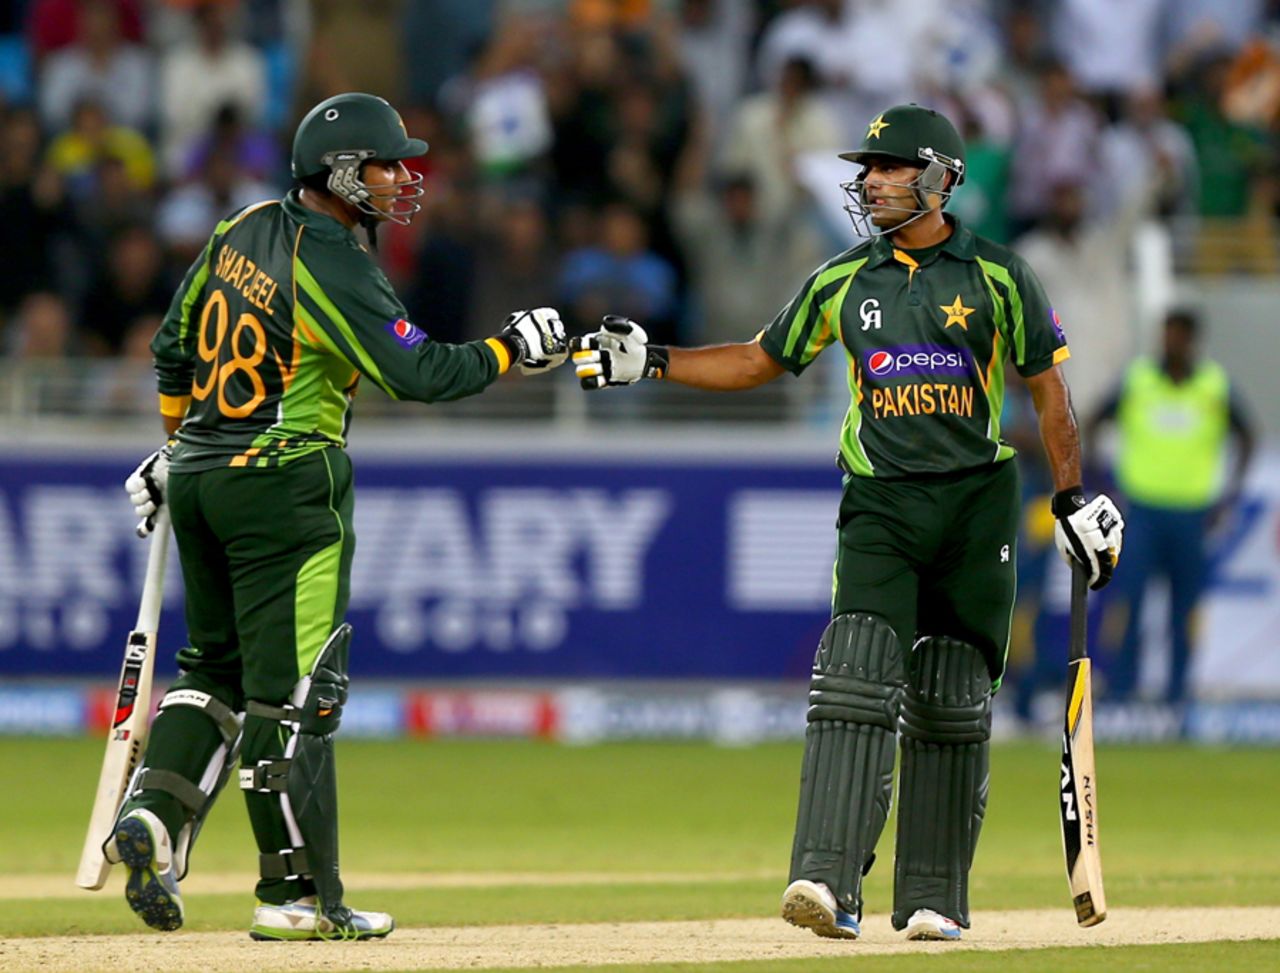 Sharjeel Khan and Mohammad Hafeez added 57 in partnership, Pakistan v Sri Lanka, 1st T20I, Dubai, December 11, 2013